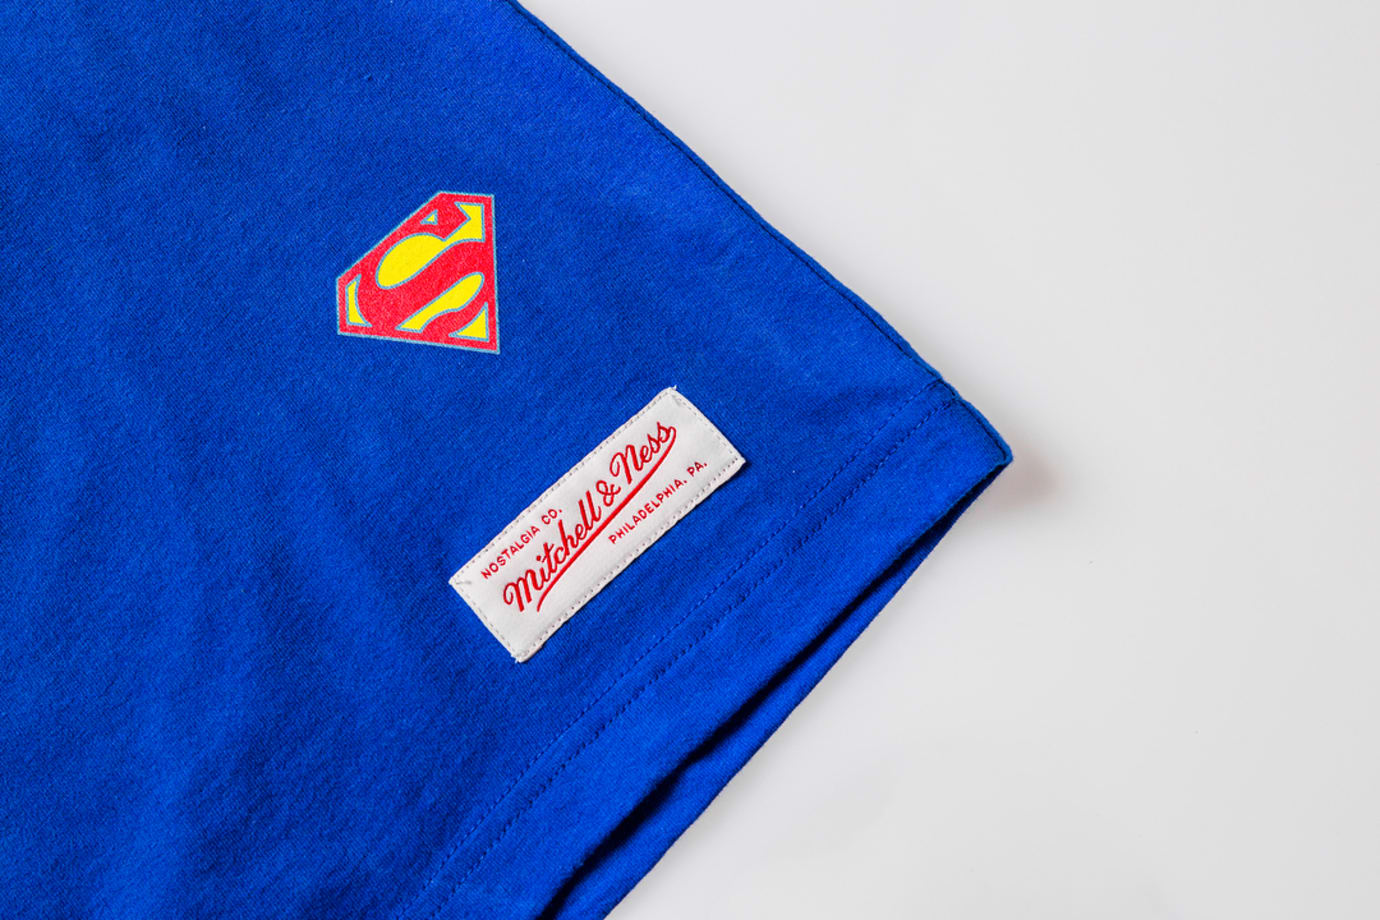 Reebok Shaq Attaq Superman Release Date Shirt